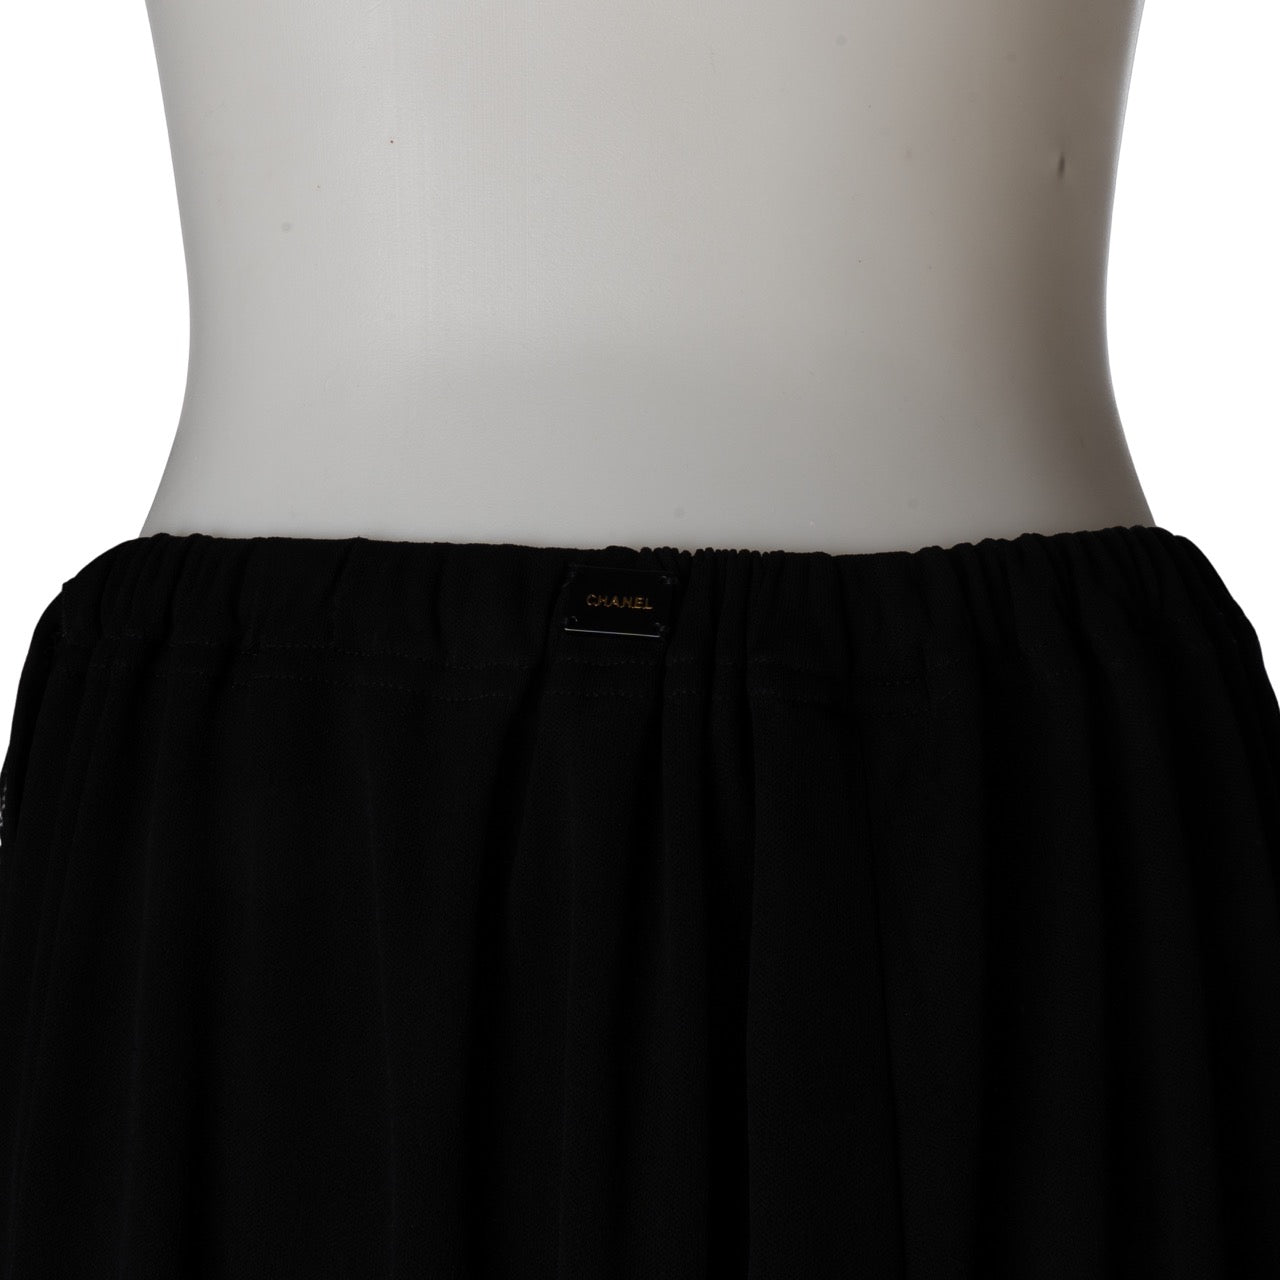 Chanel Viscose Skirt (40)